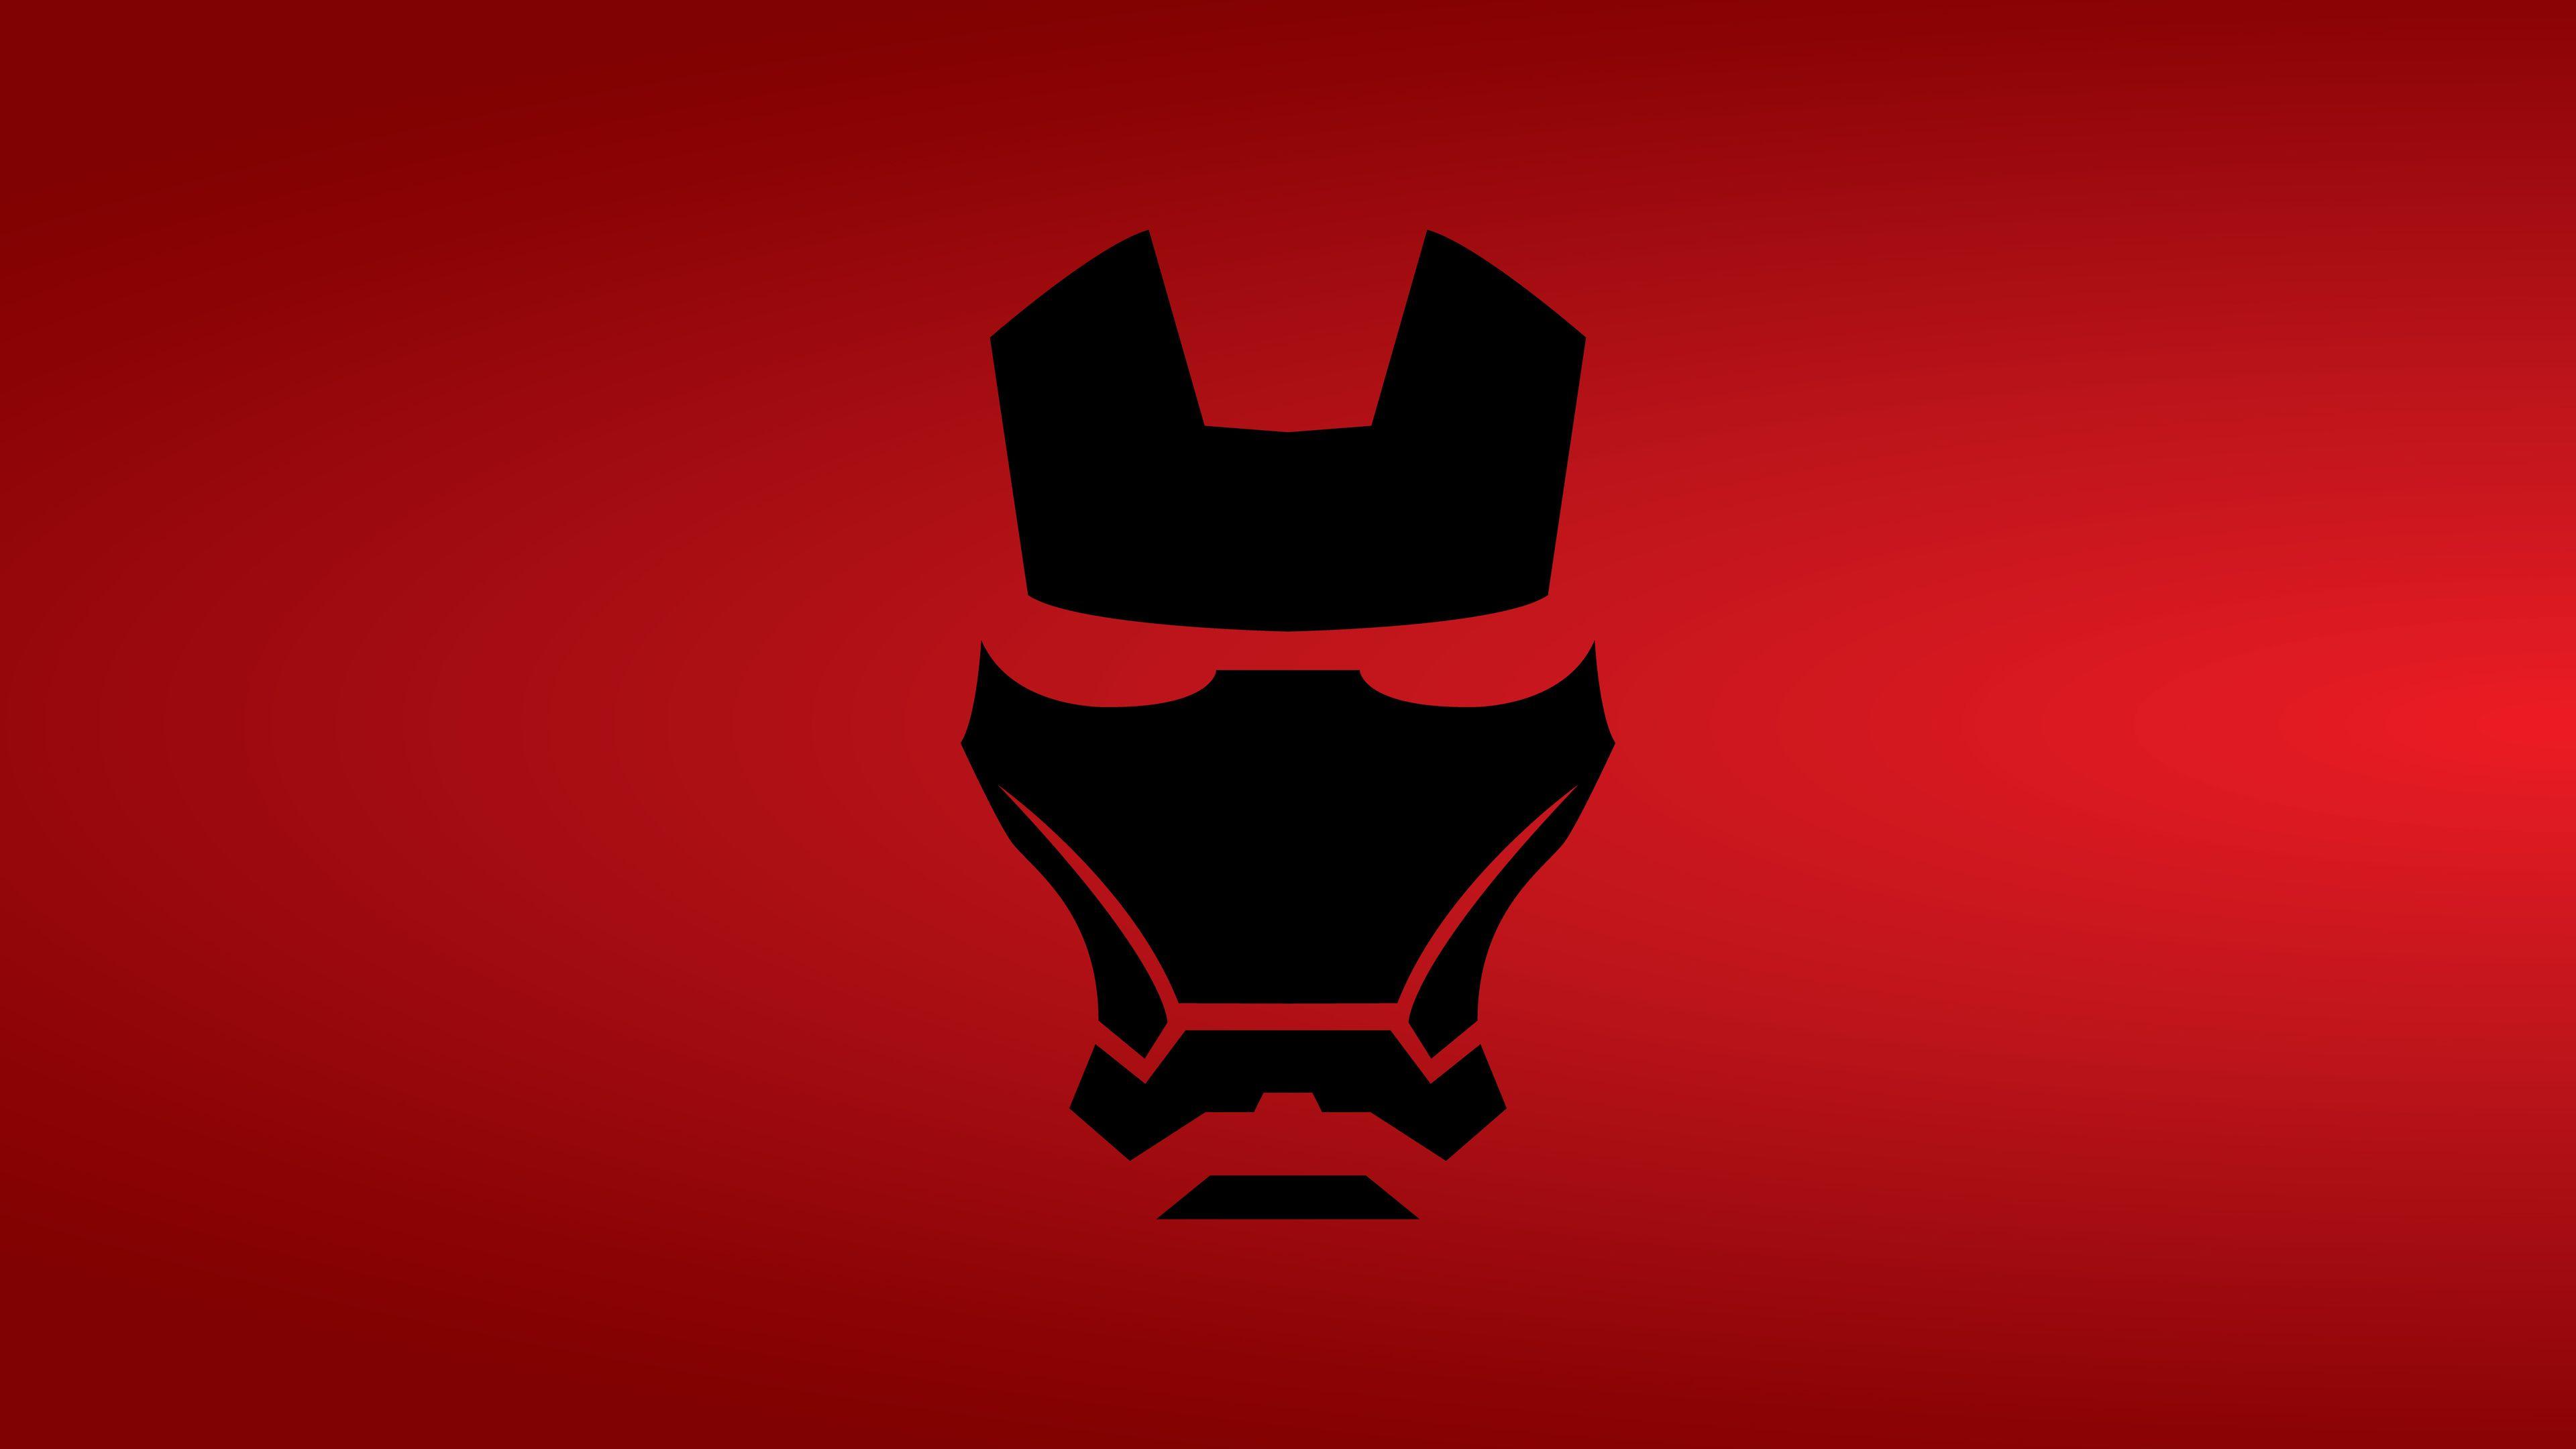 Iron Man Mask Minimalist 4k superheroes wallpaper, red wallpaper, minimalist wallpaper, minimalism wal. Iron man wallpaper, Red wallpaper, Minimalist wallpaper